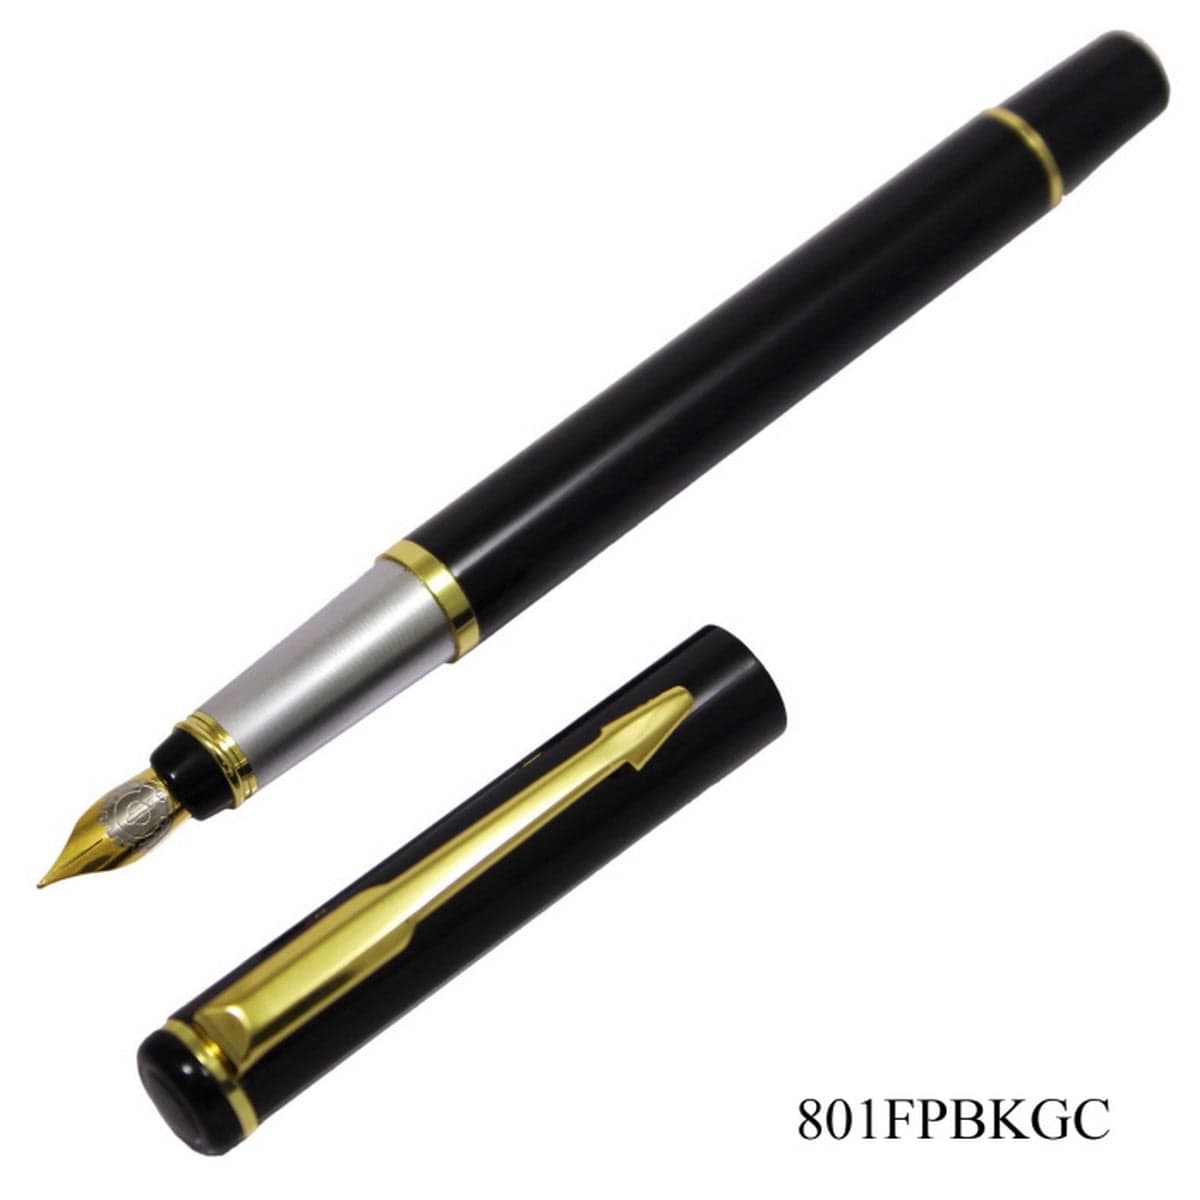 jags-mumbai Fountain pens Elegant Fountain Pen with Black Barrel and Golden Clip - 801FPBKGC